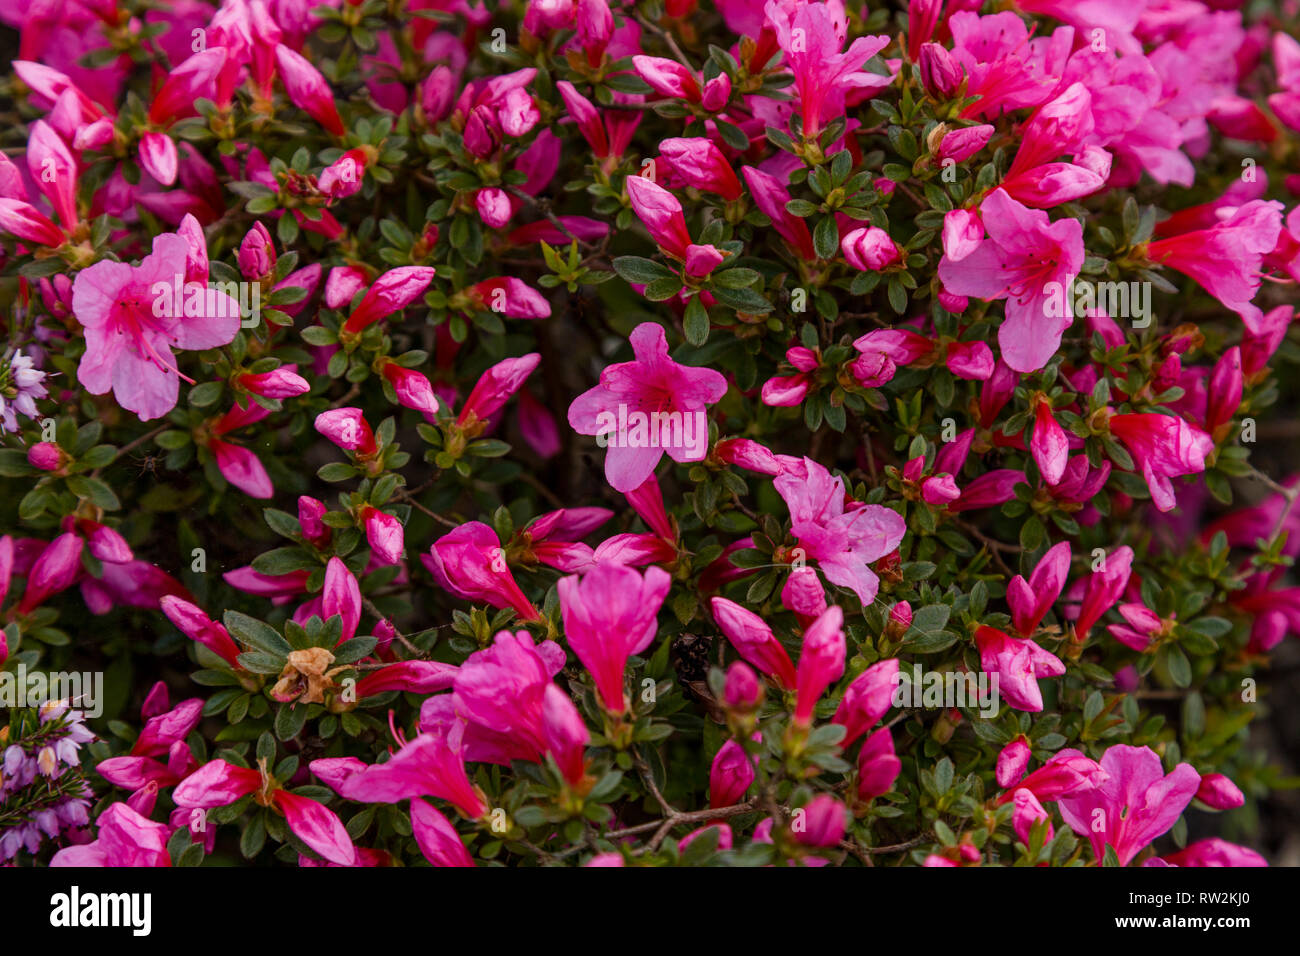 A deep pink azalea shrub in full flower. Stock Photo